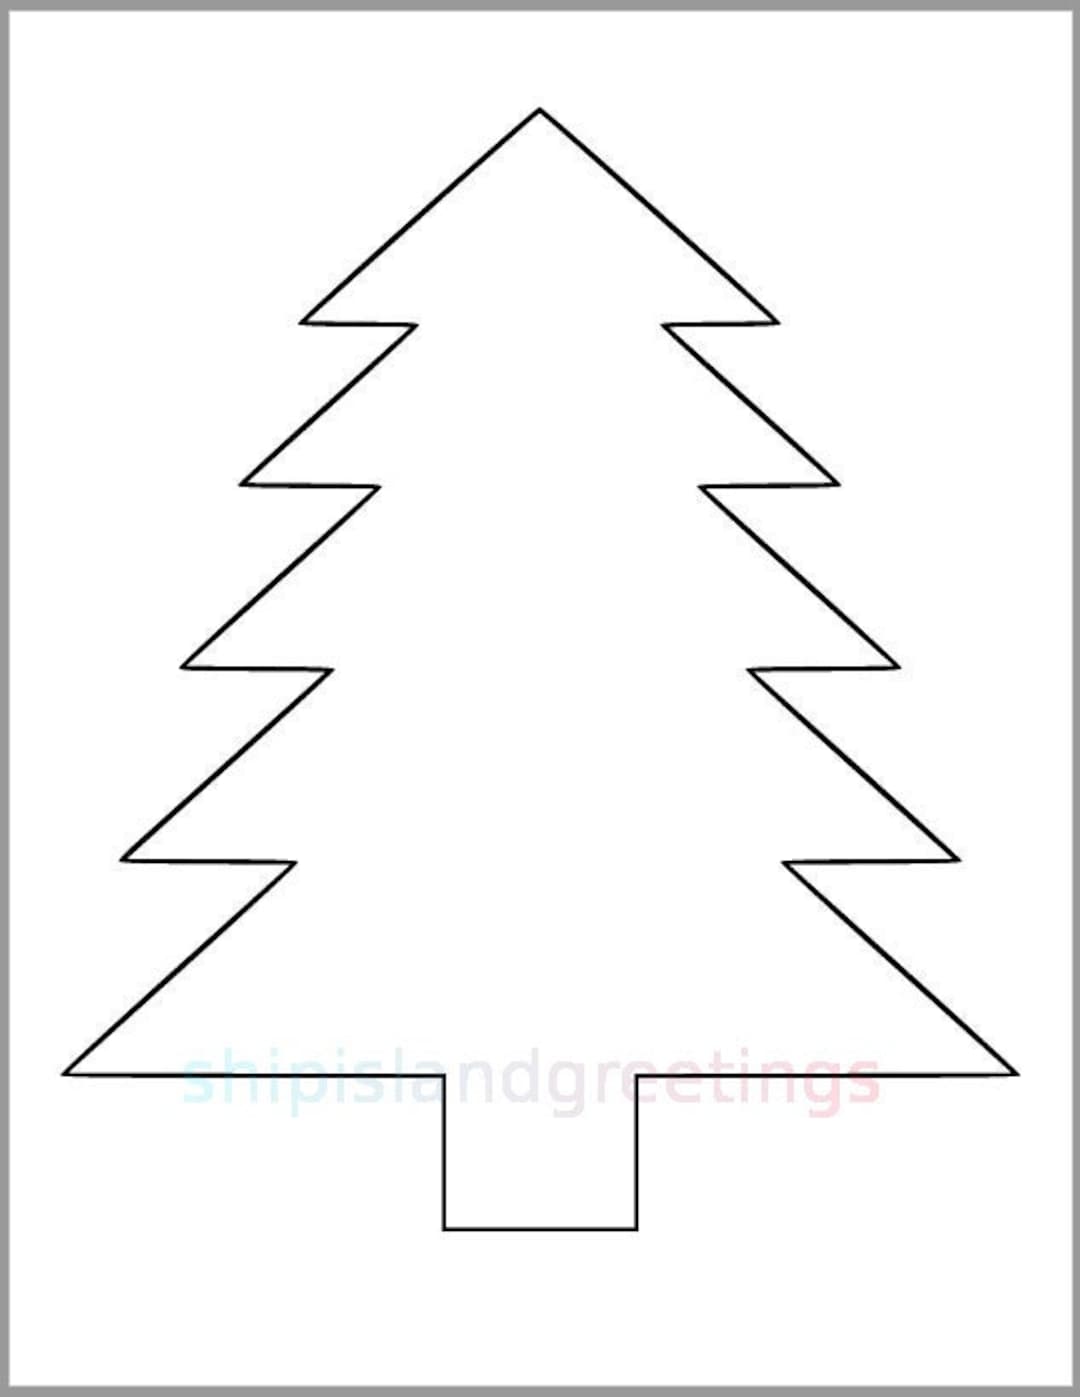 Printable pine tree template